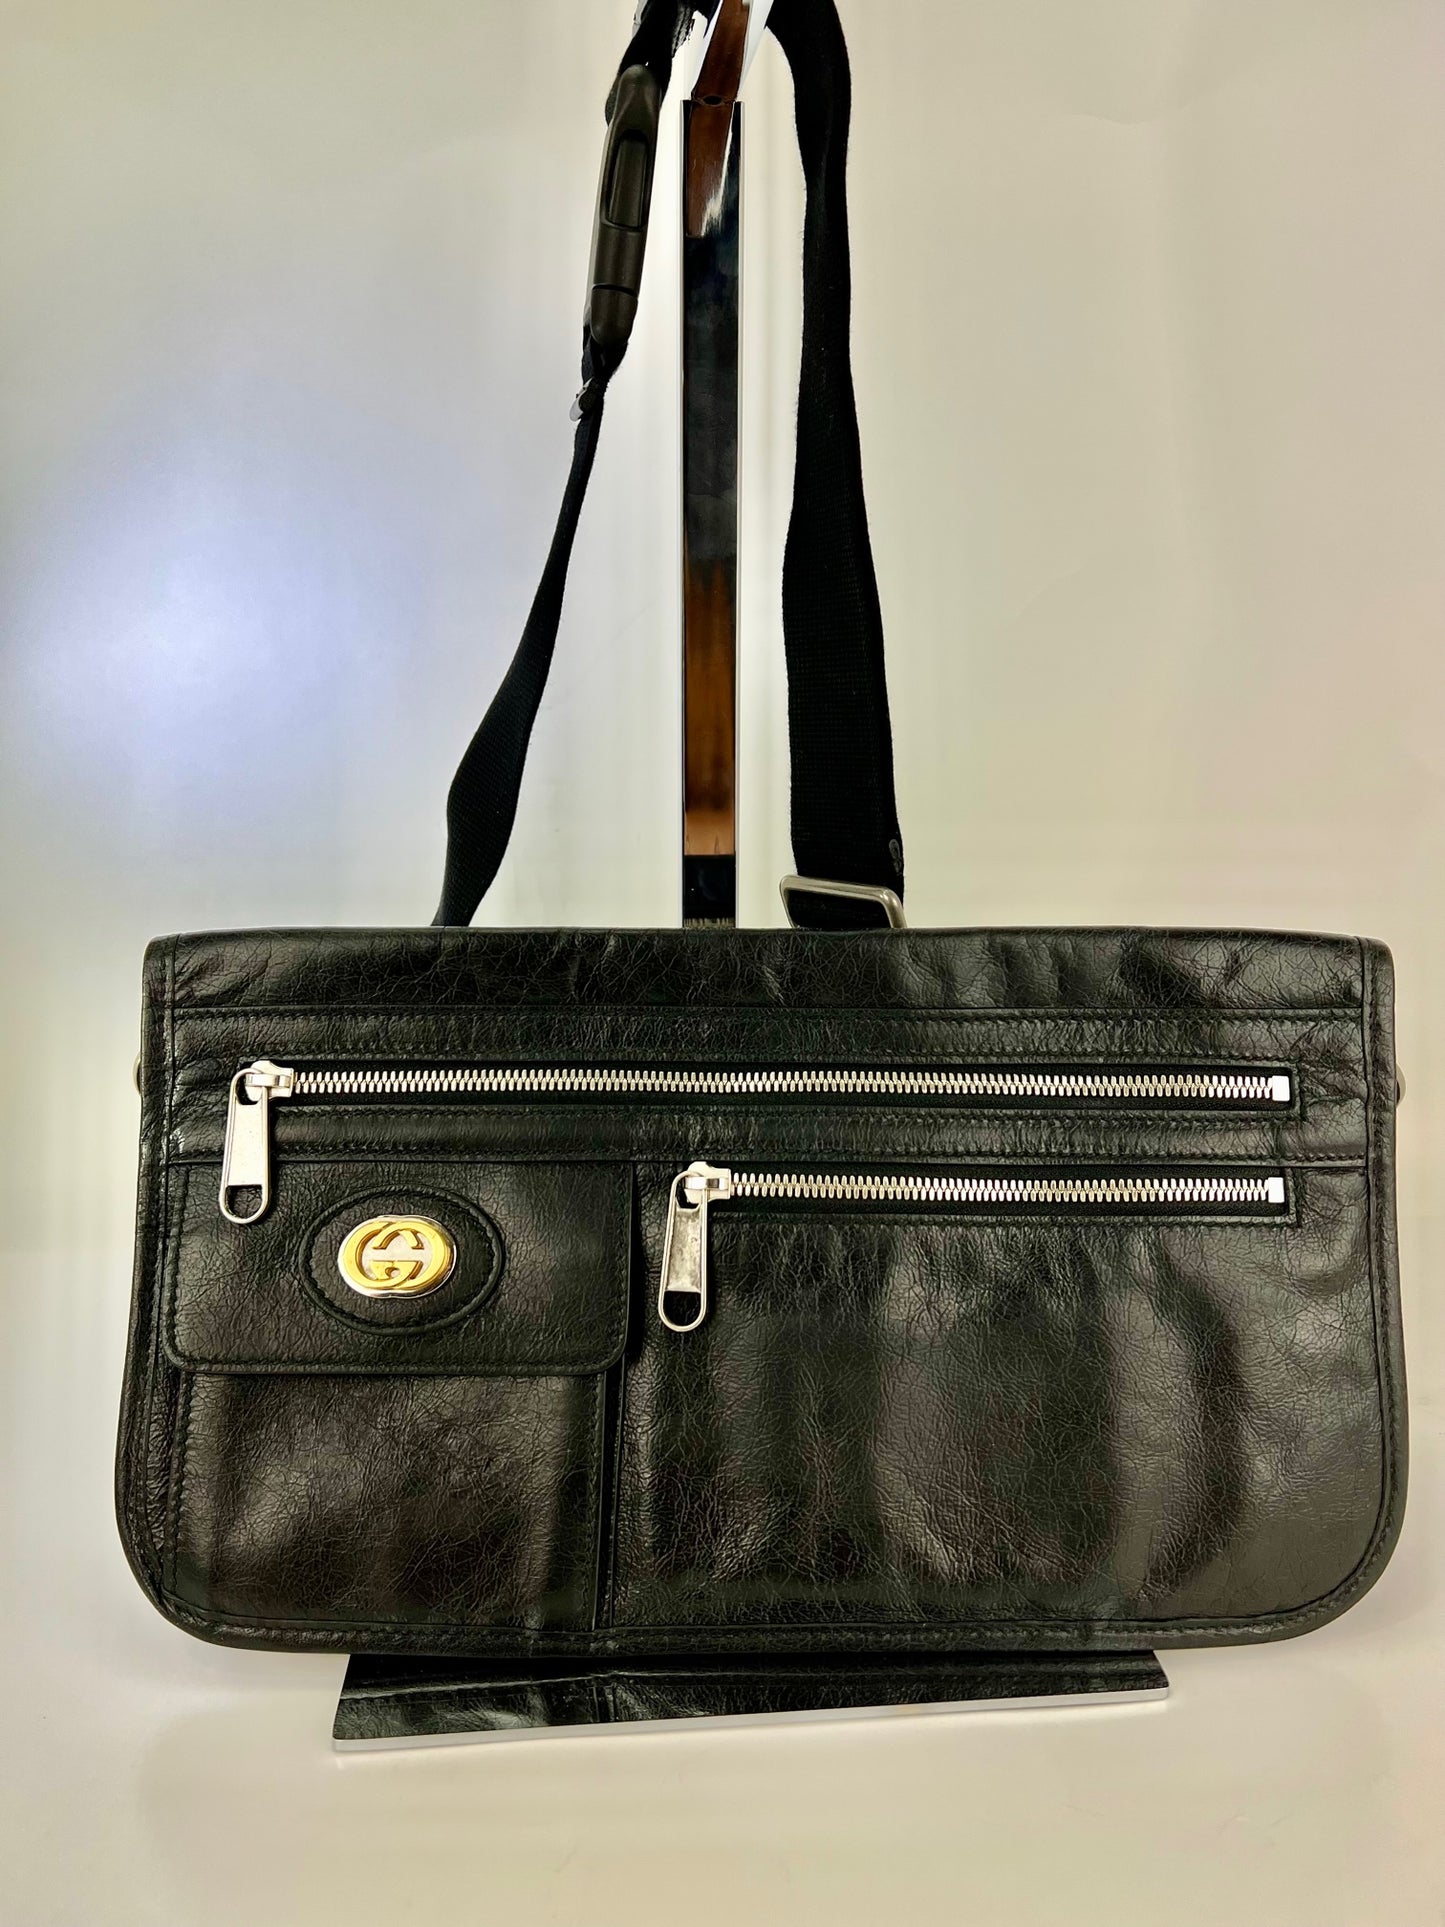 Gucci Messenger Bag Interlocking G Black Leather Crossbody